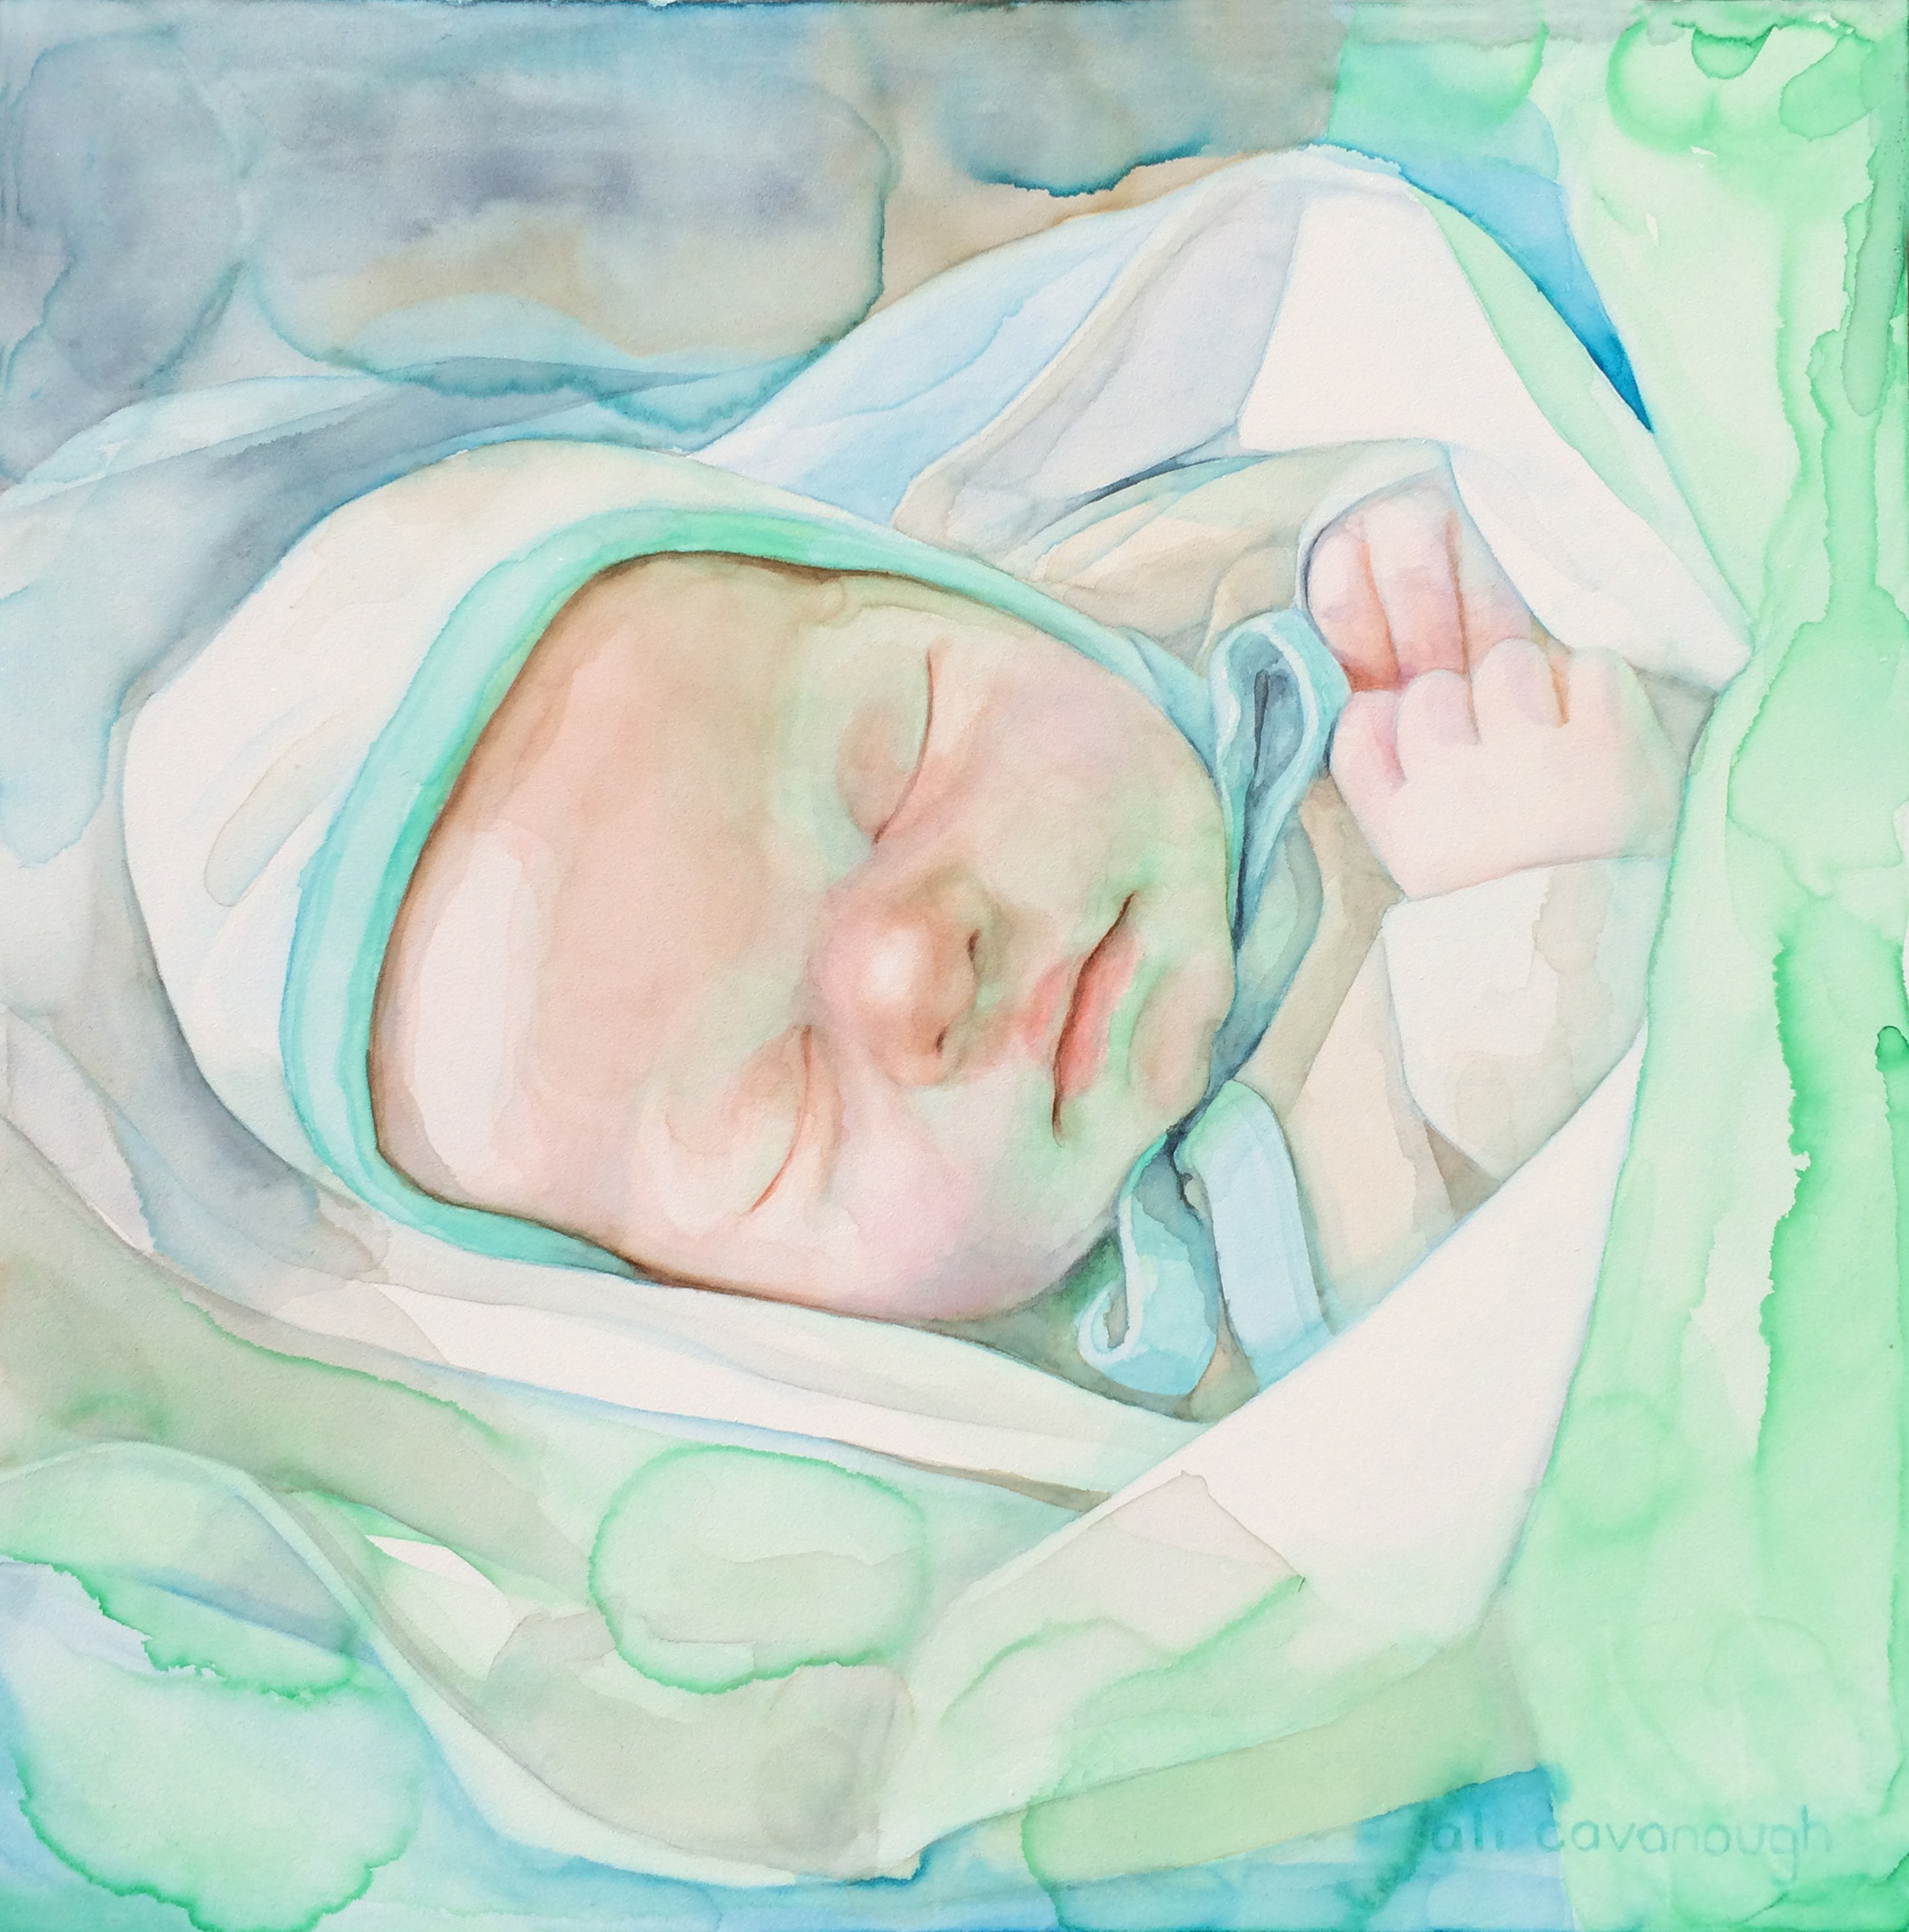 Watercolors of babies - Ali Cavanaugh - RealismToday.com